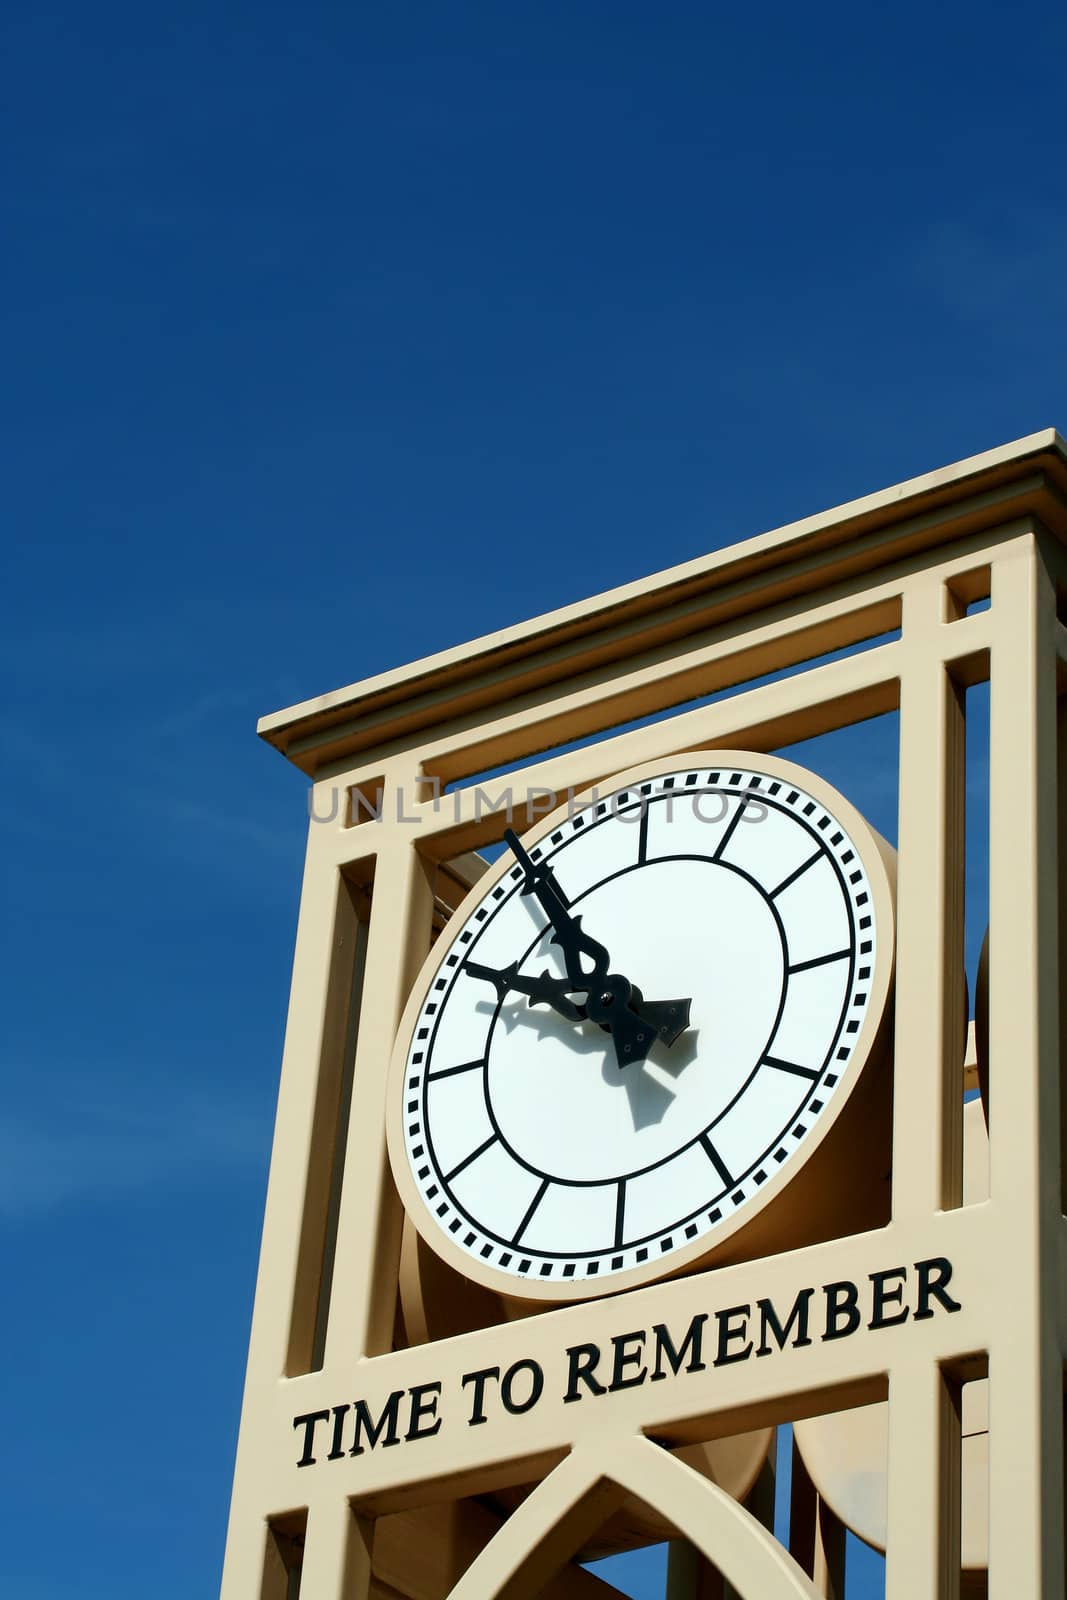 Time to remember clock by njnightsky